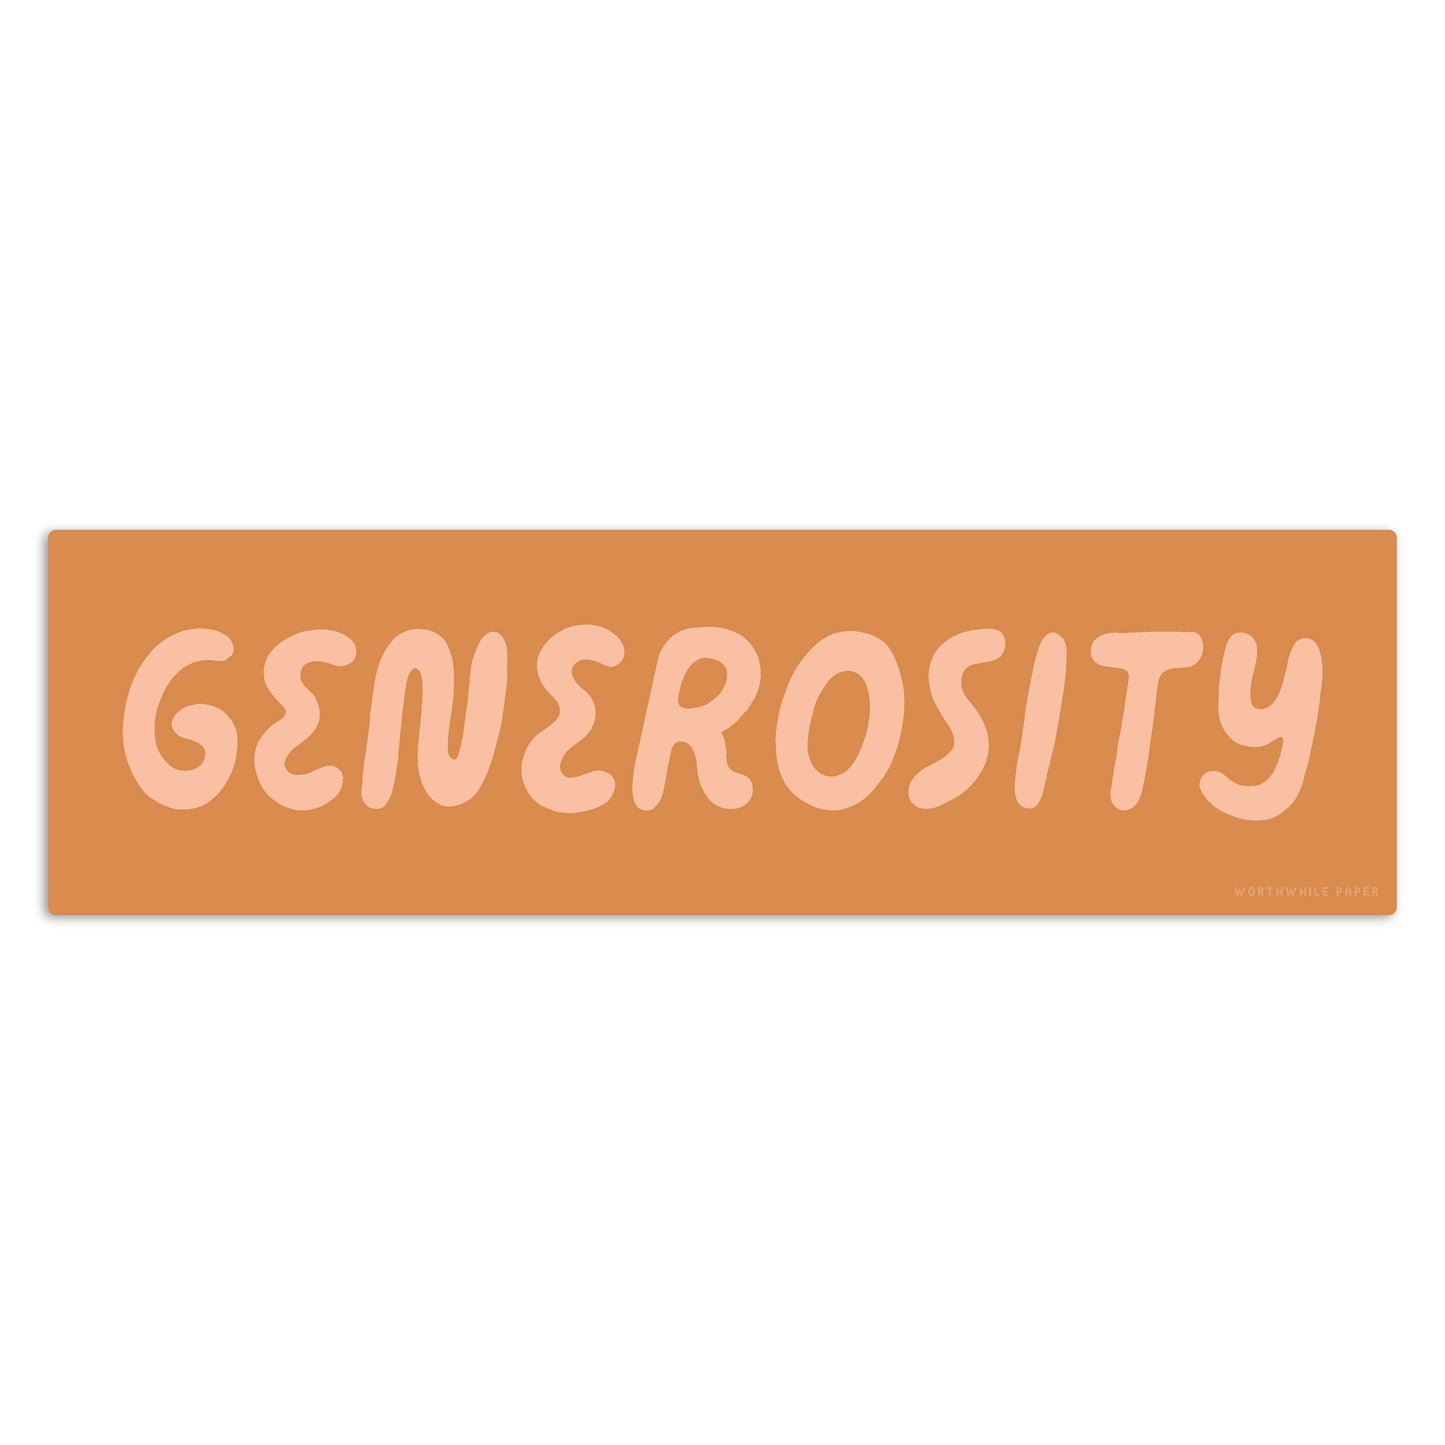 Generosity Sticker Worthwhile Paper 